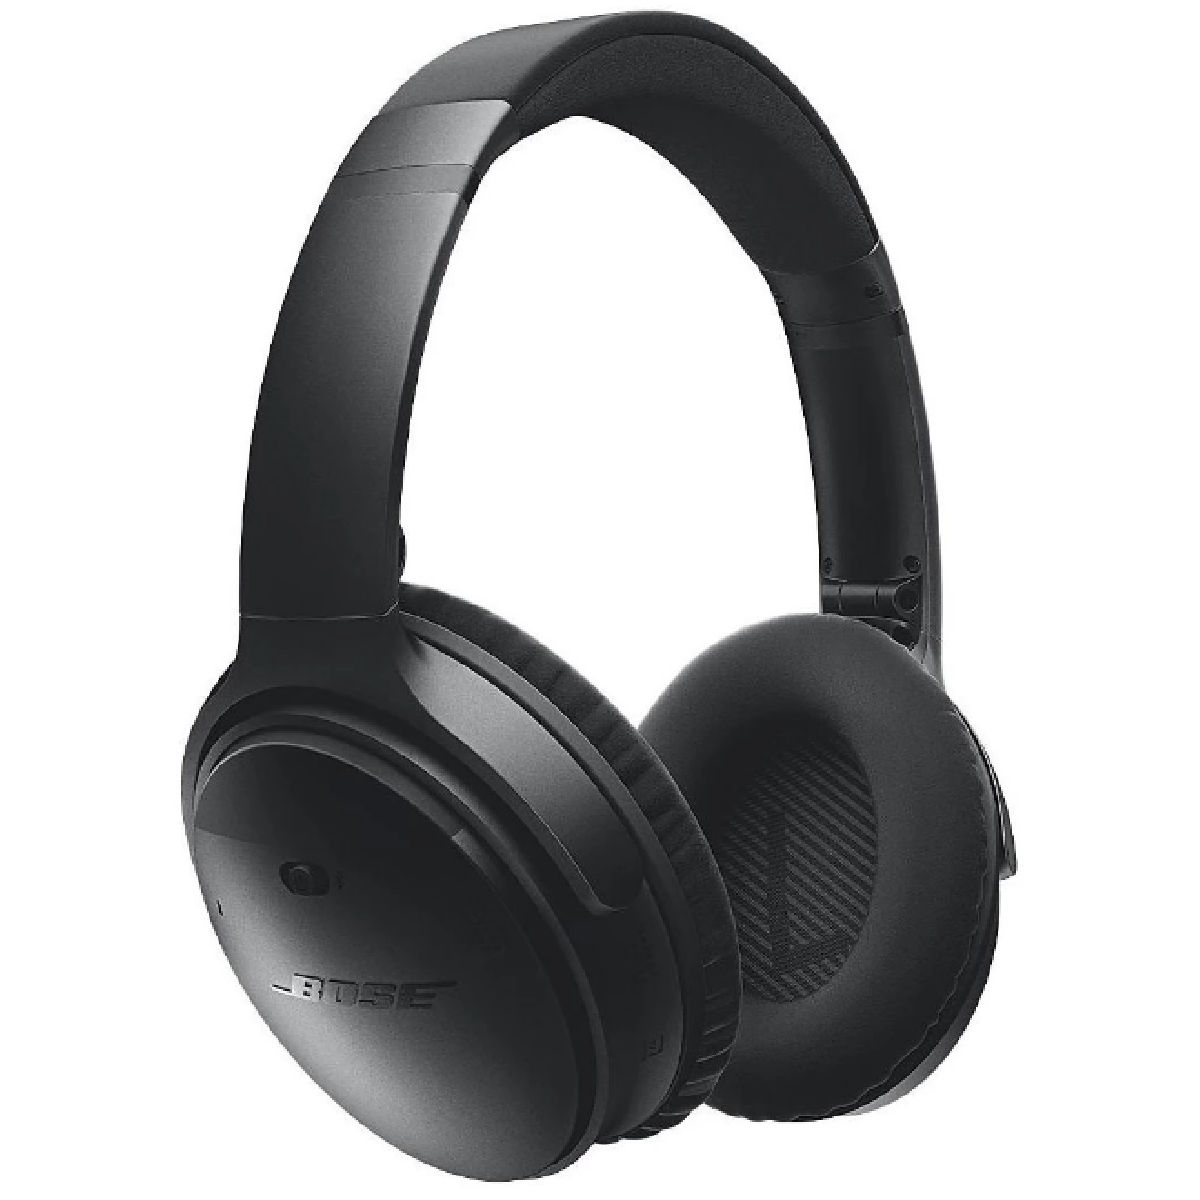 Bose QC35 Noise Canceling Wireless Headphones